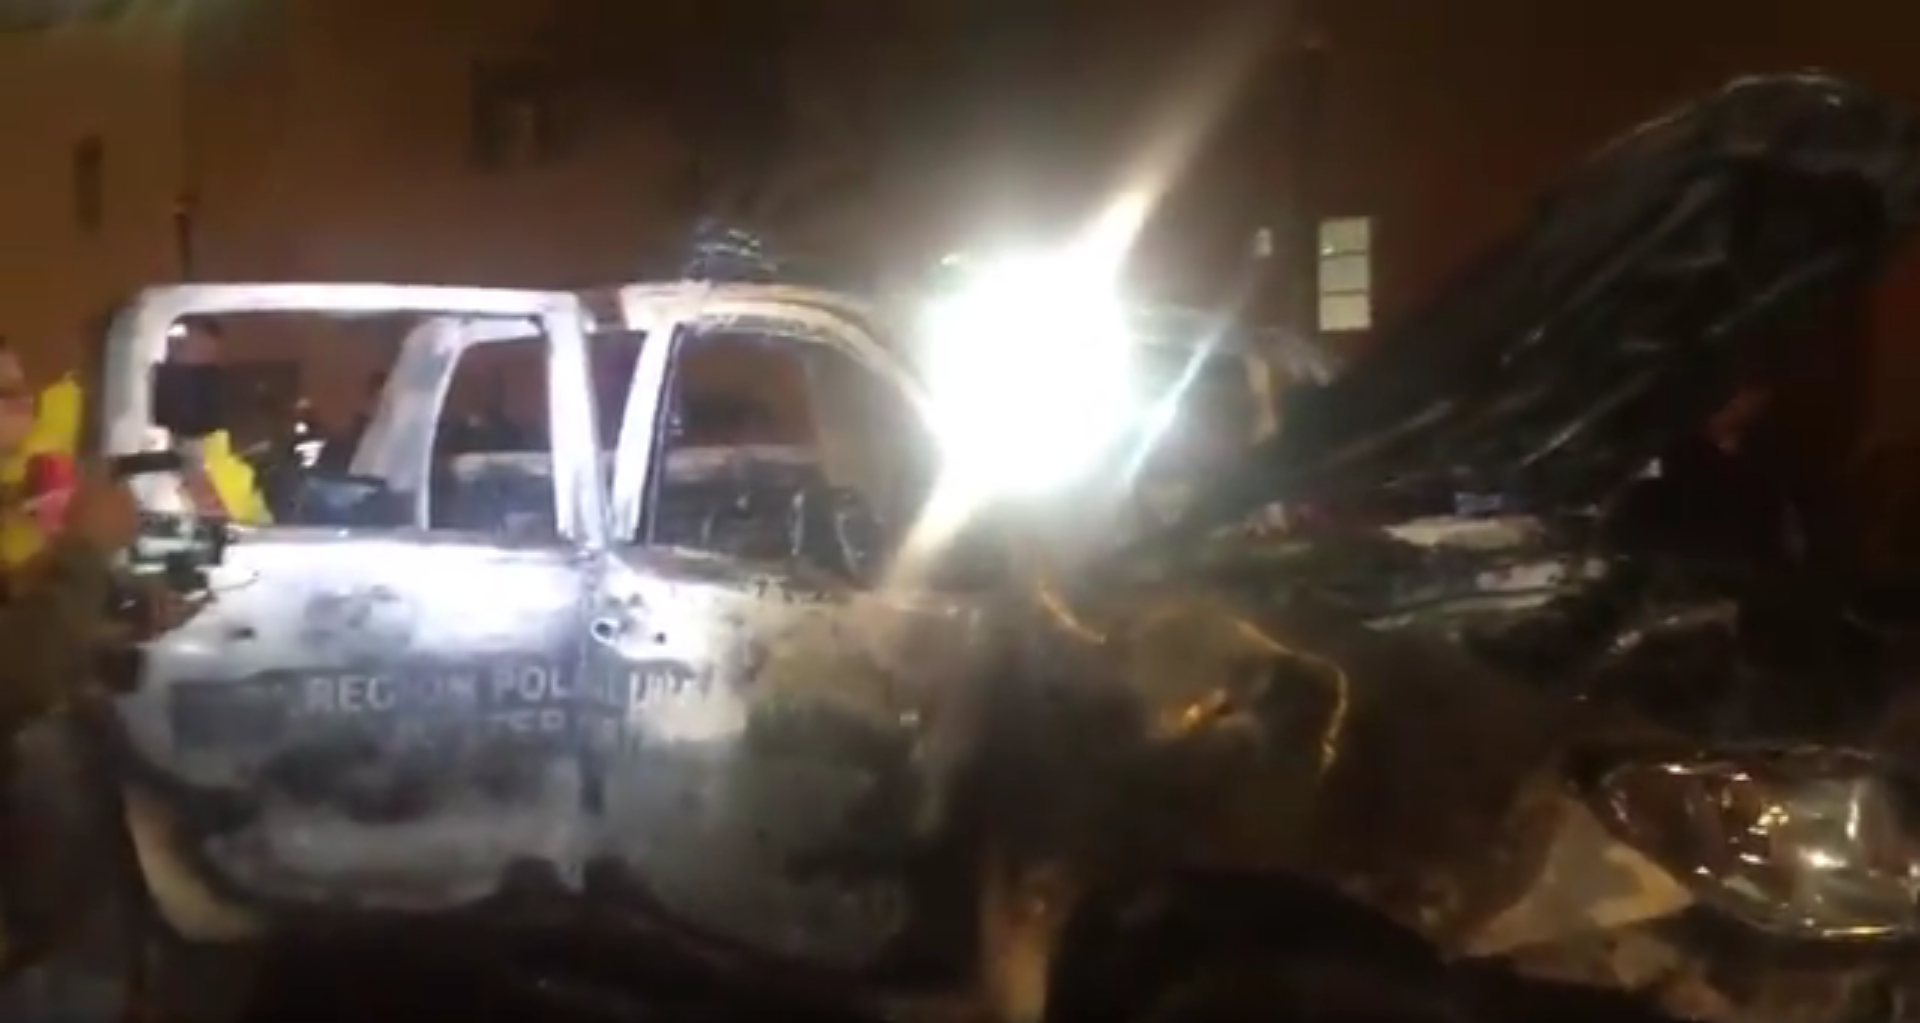 Burned down police car